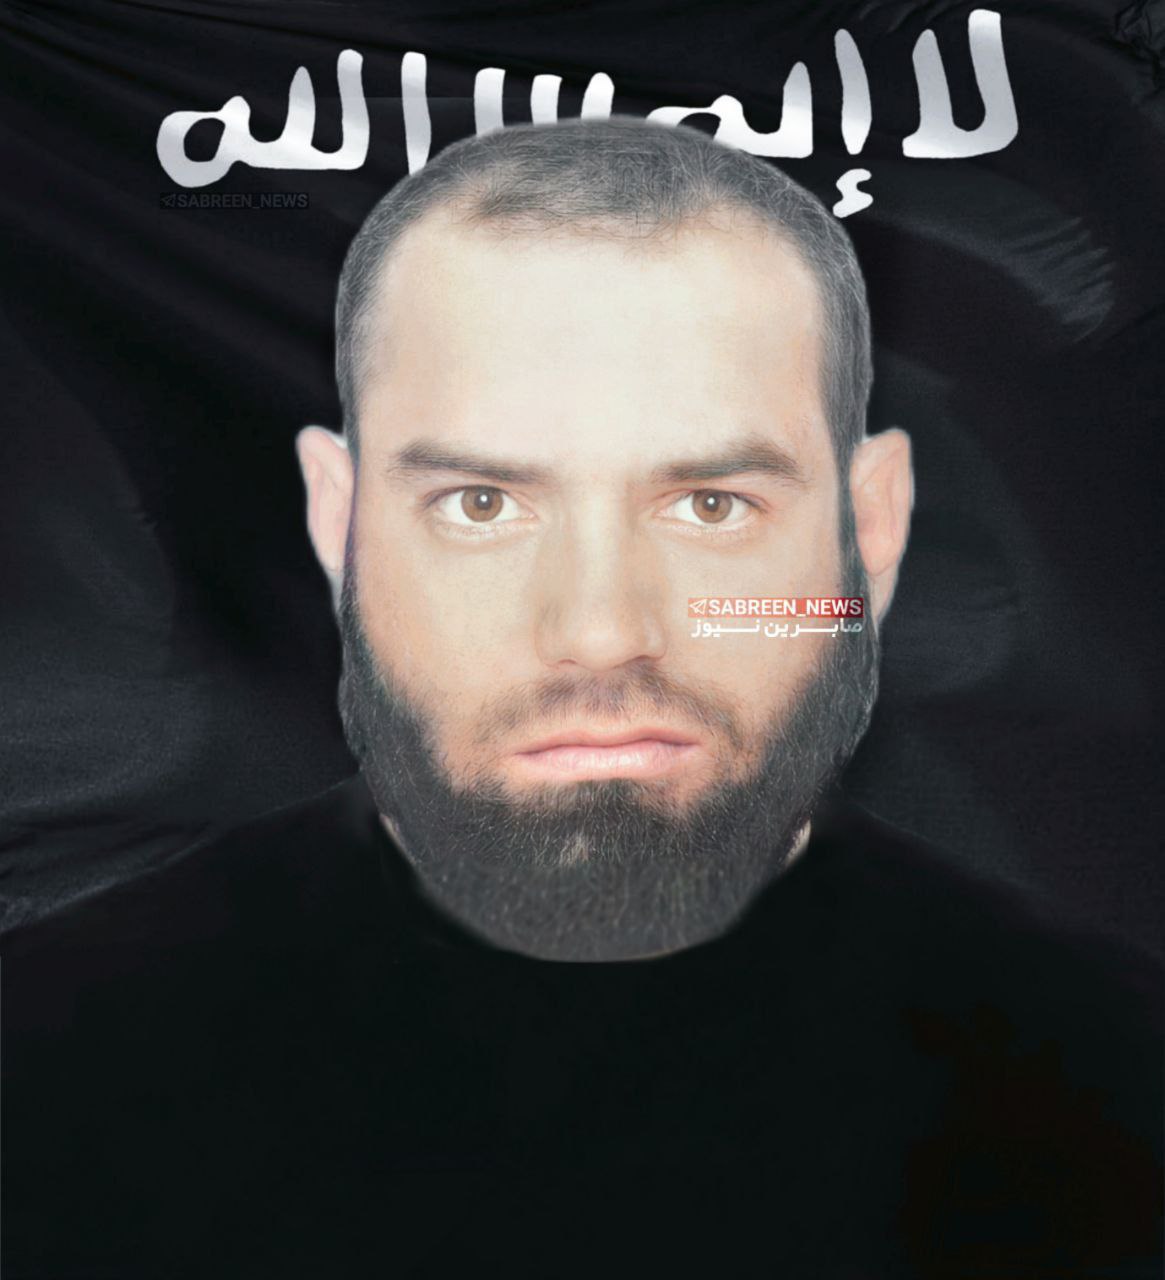 الهاشمی القرشی با لقب عجیب، رهبر داعش شد + عکس